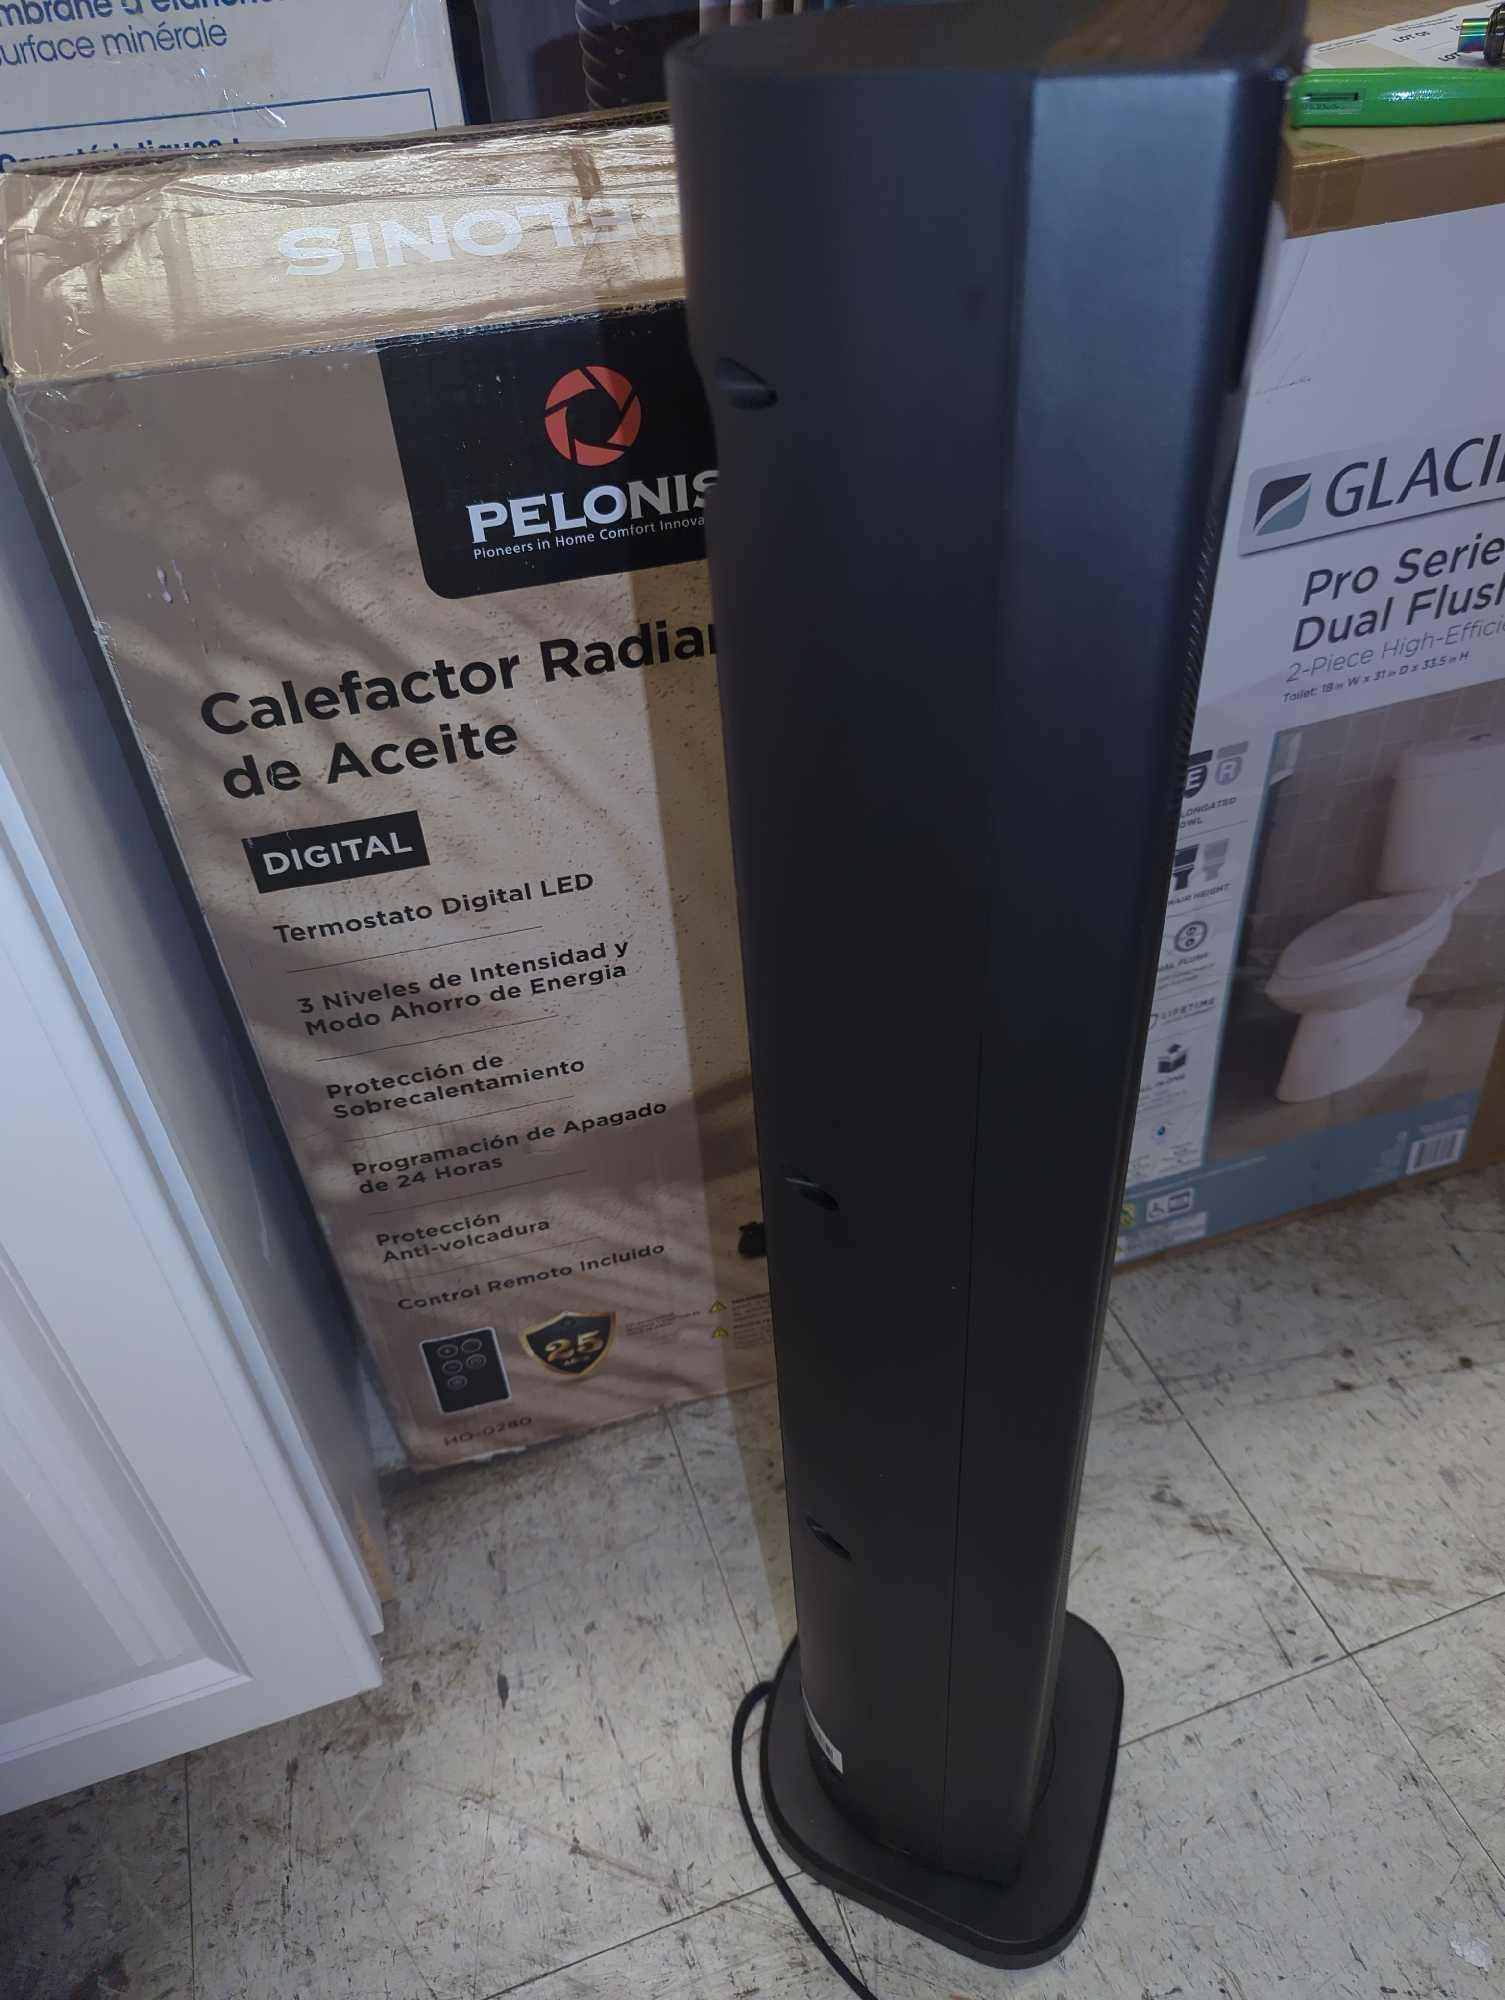 Pelonis (Parts) 30 in. 1500-Watt Digital Tower Ceramic Heater, Model PHT30D7BBB, Retail Price $99,